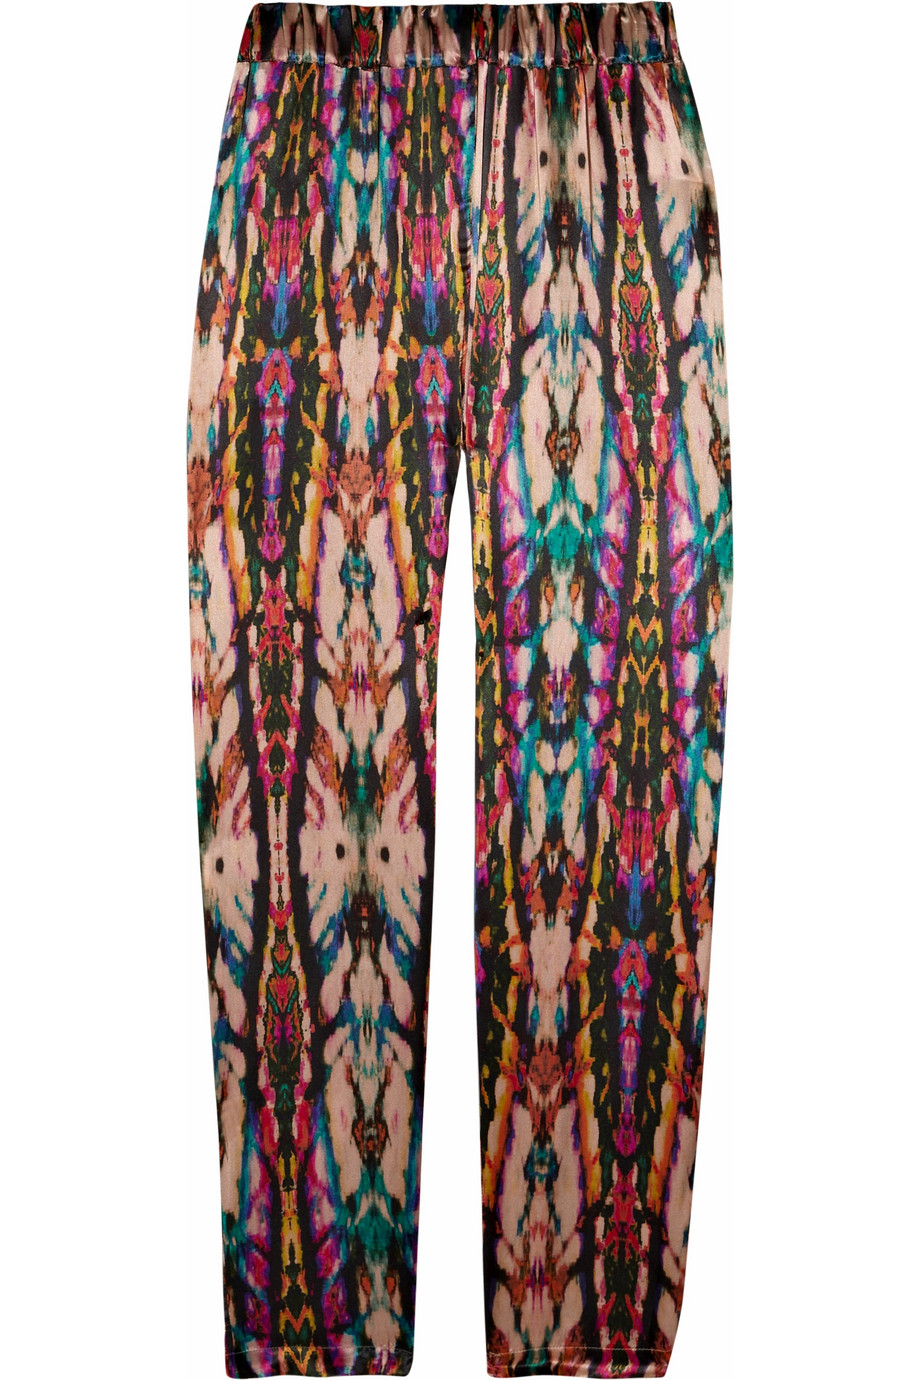 Sandro Printed Silk-satin Pants in Pink - Lyst